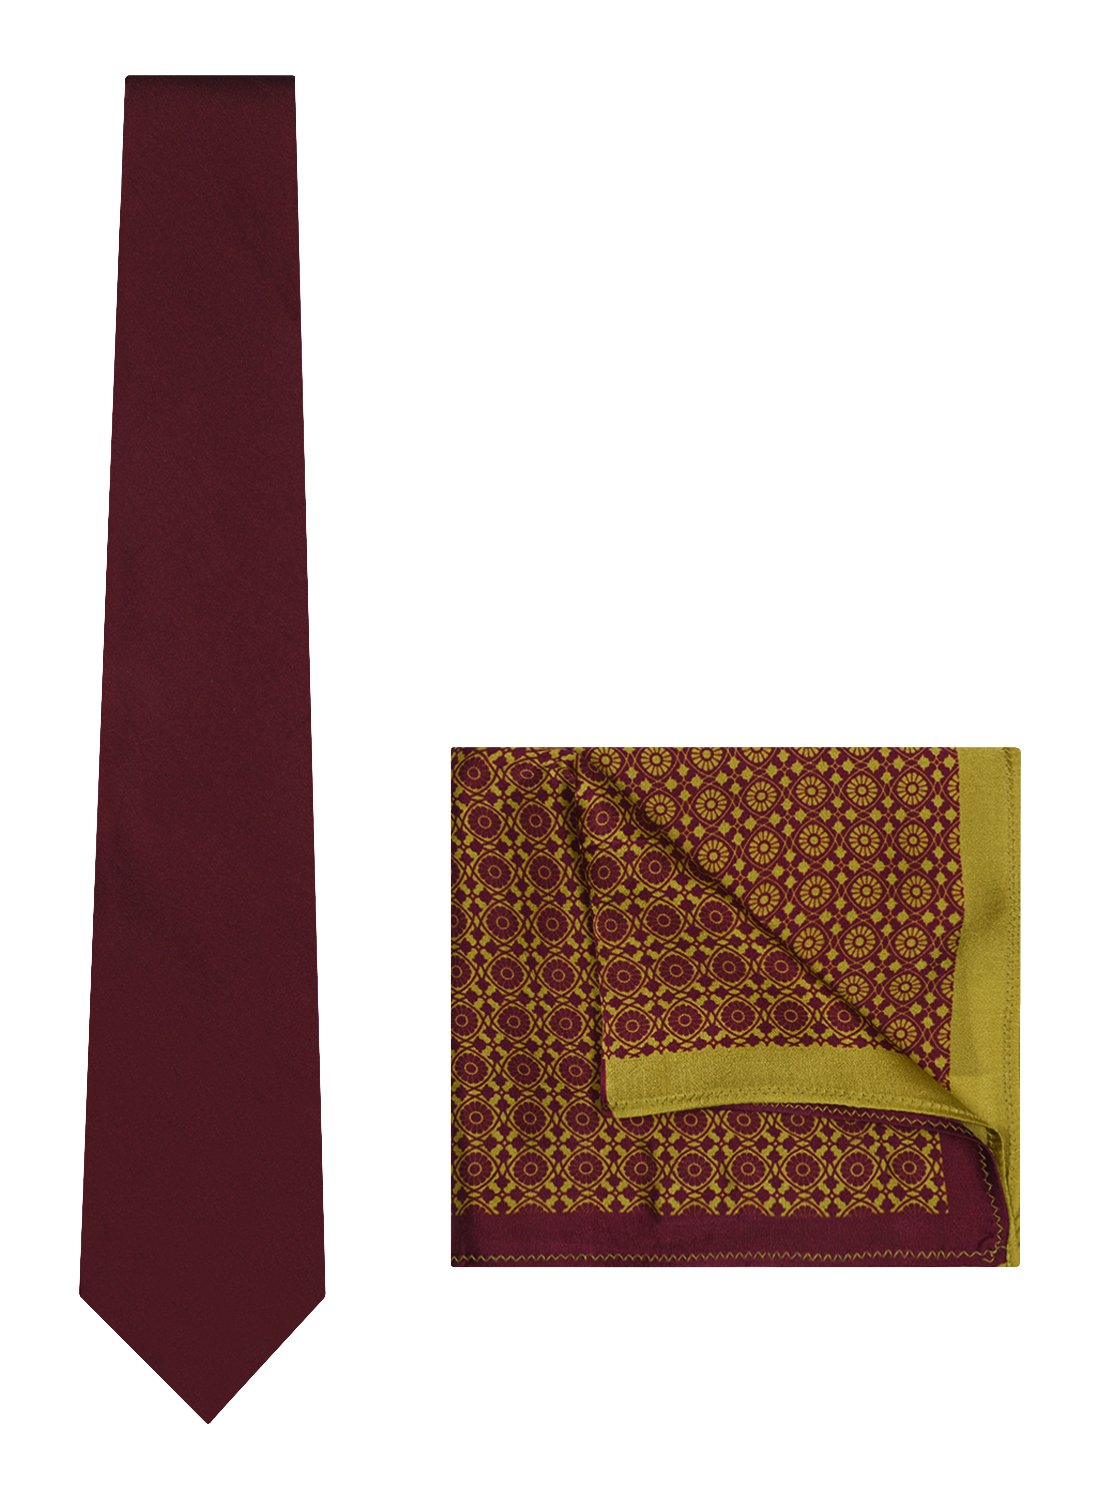 Chokore Burgundy color Plain Silk Tie & Burgundy & Lemon Green silk pocket square set